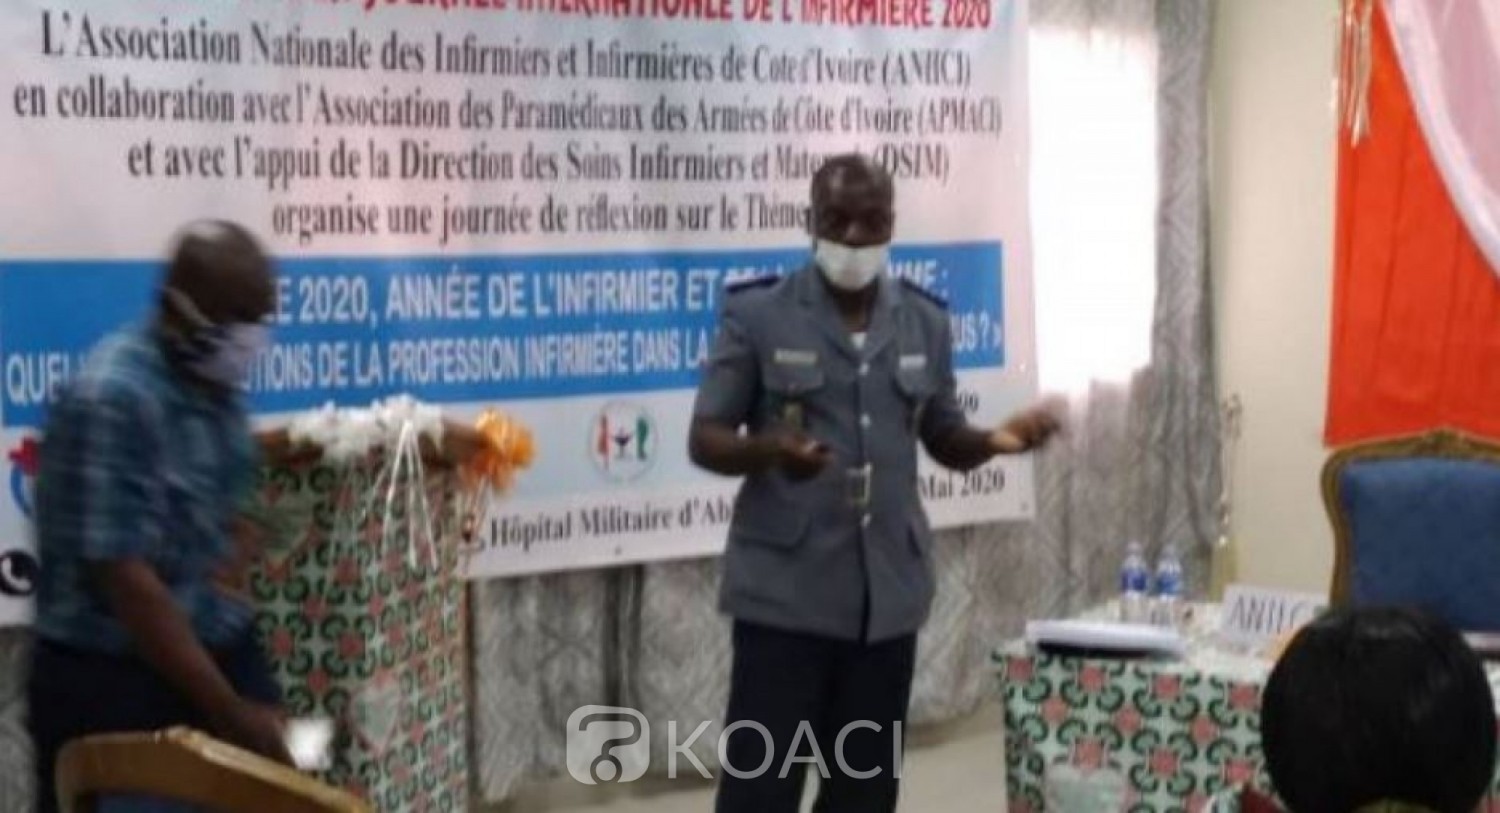 Hopitaux Militaire HMA Abidjan_CIV_9